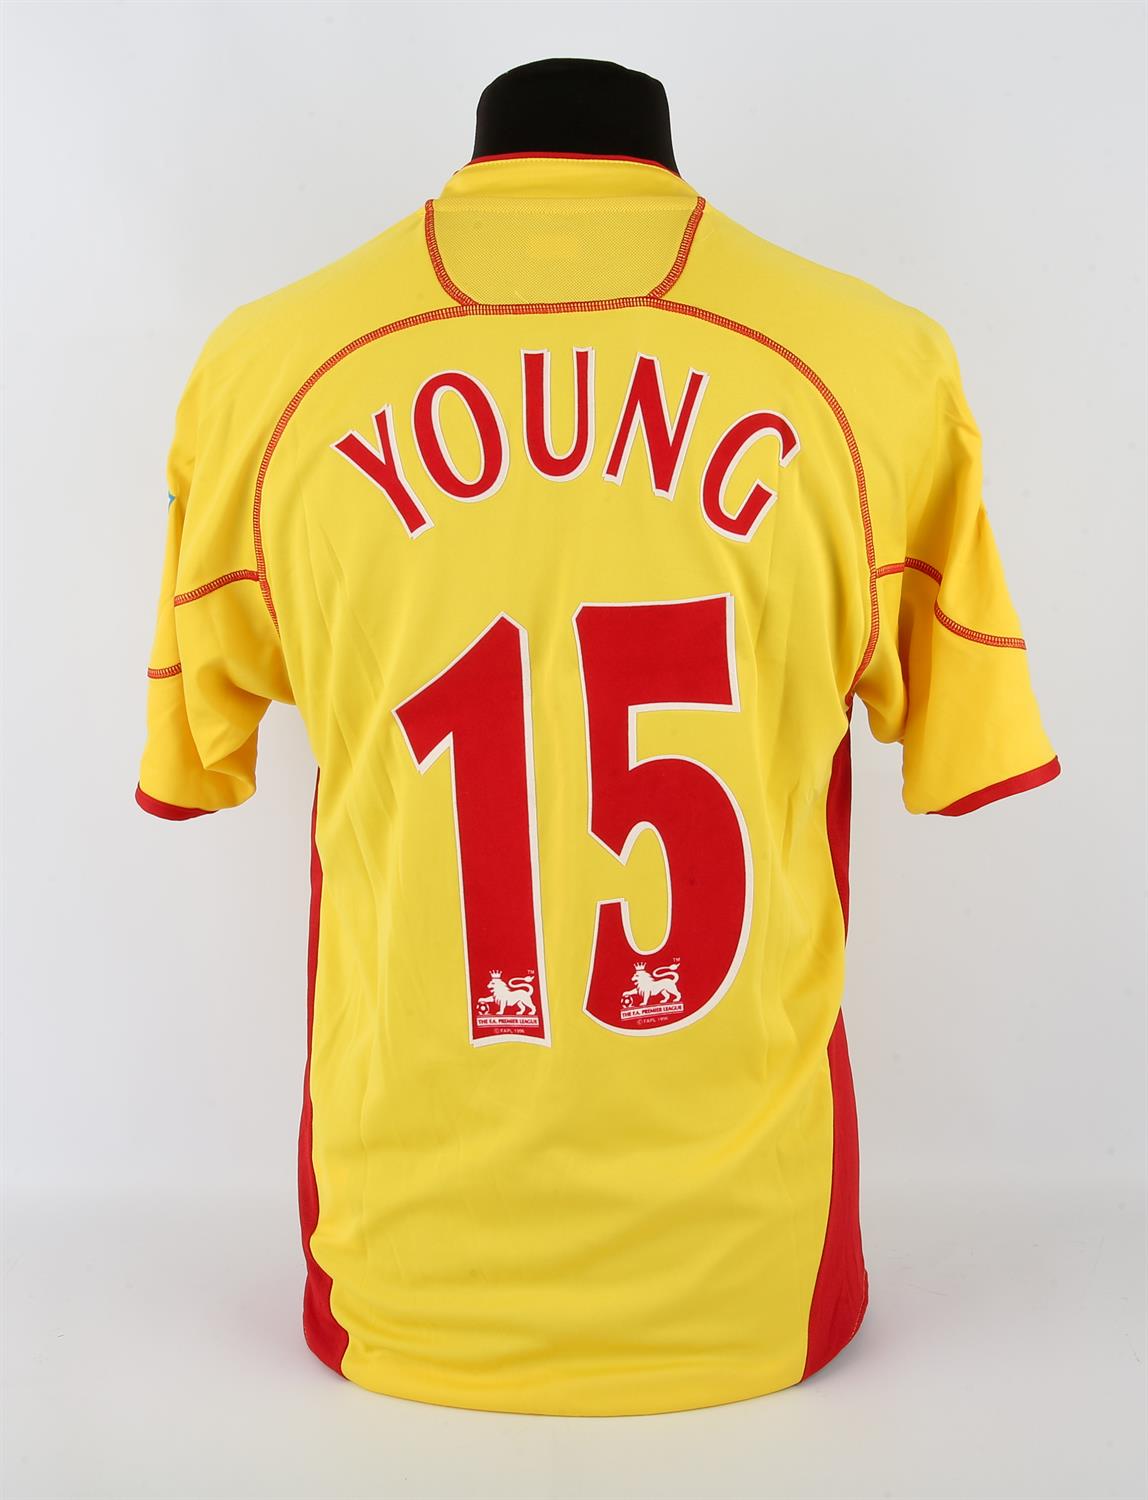 Watford Football club, Young (No.15) 125th Anniversary shirt from 2006-2007, S/S.